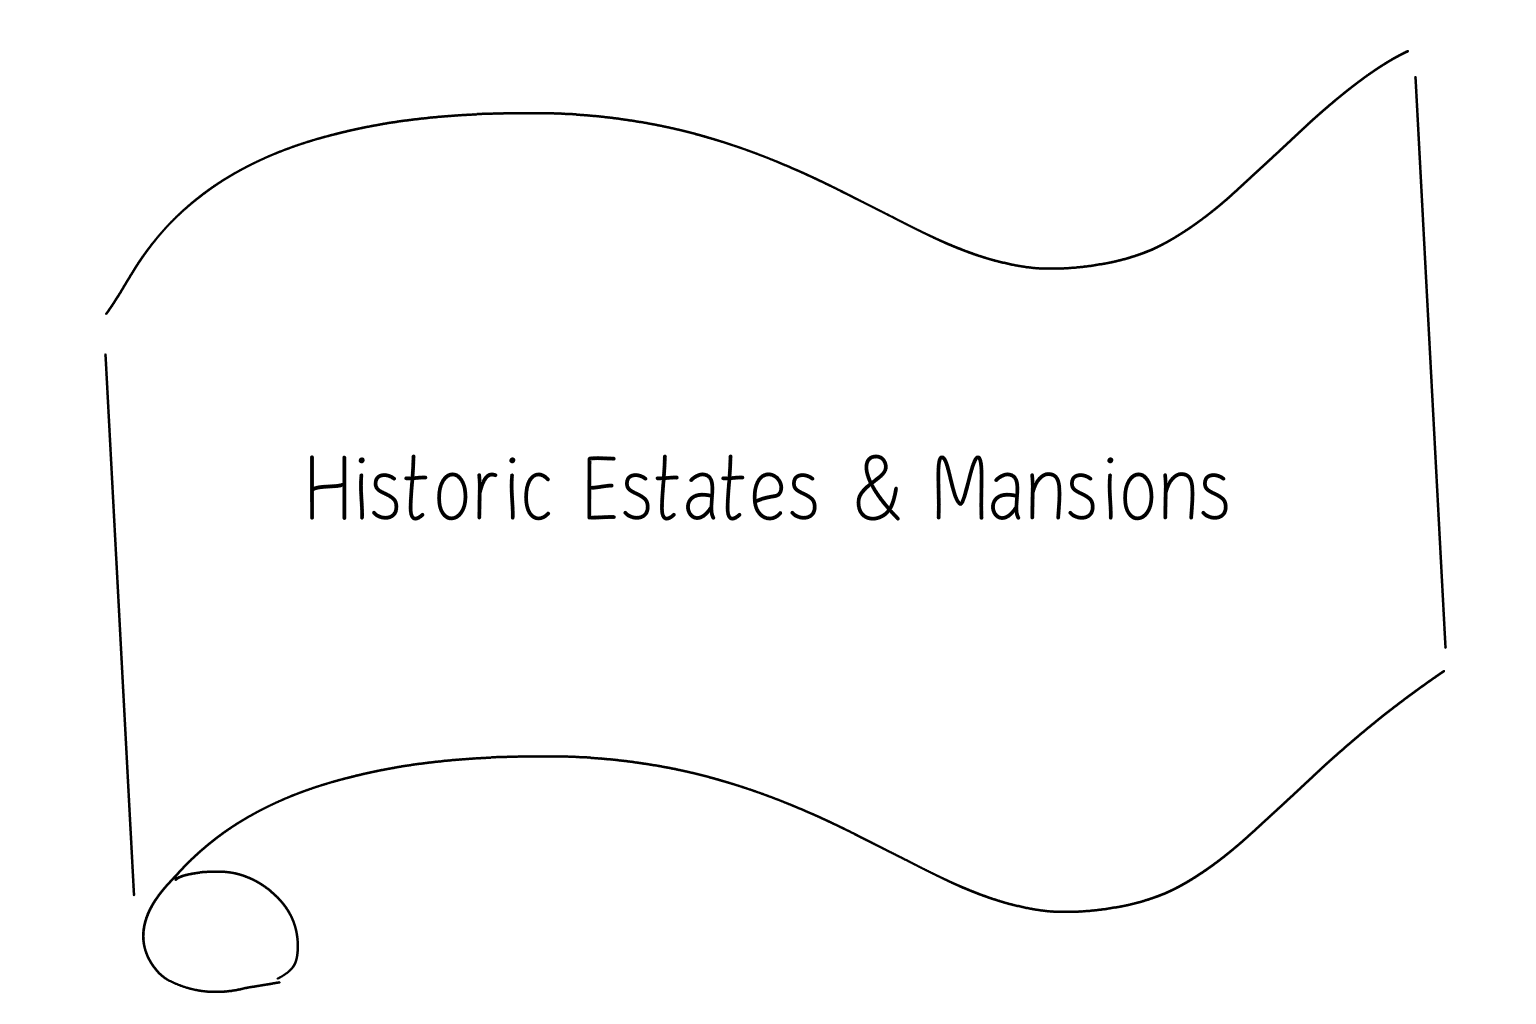 Illustration of Historic Estates & Mansions